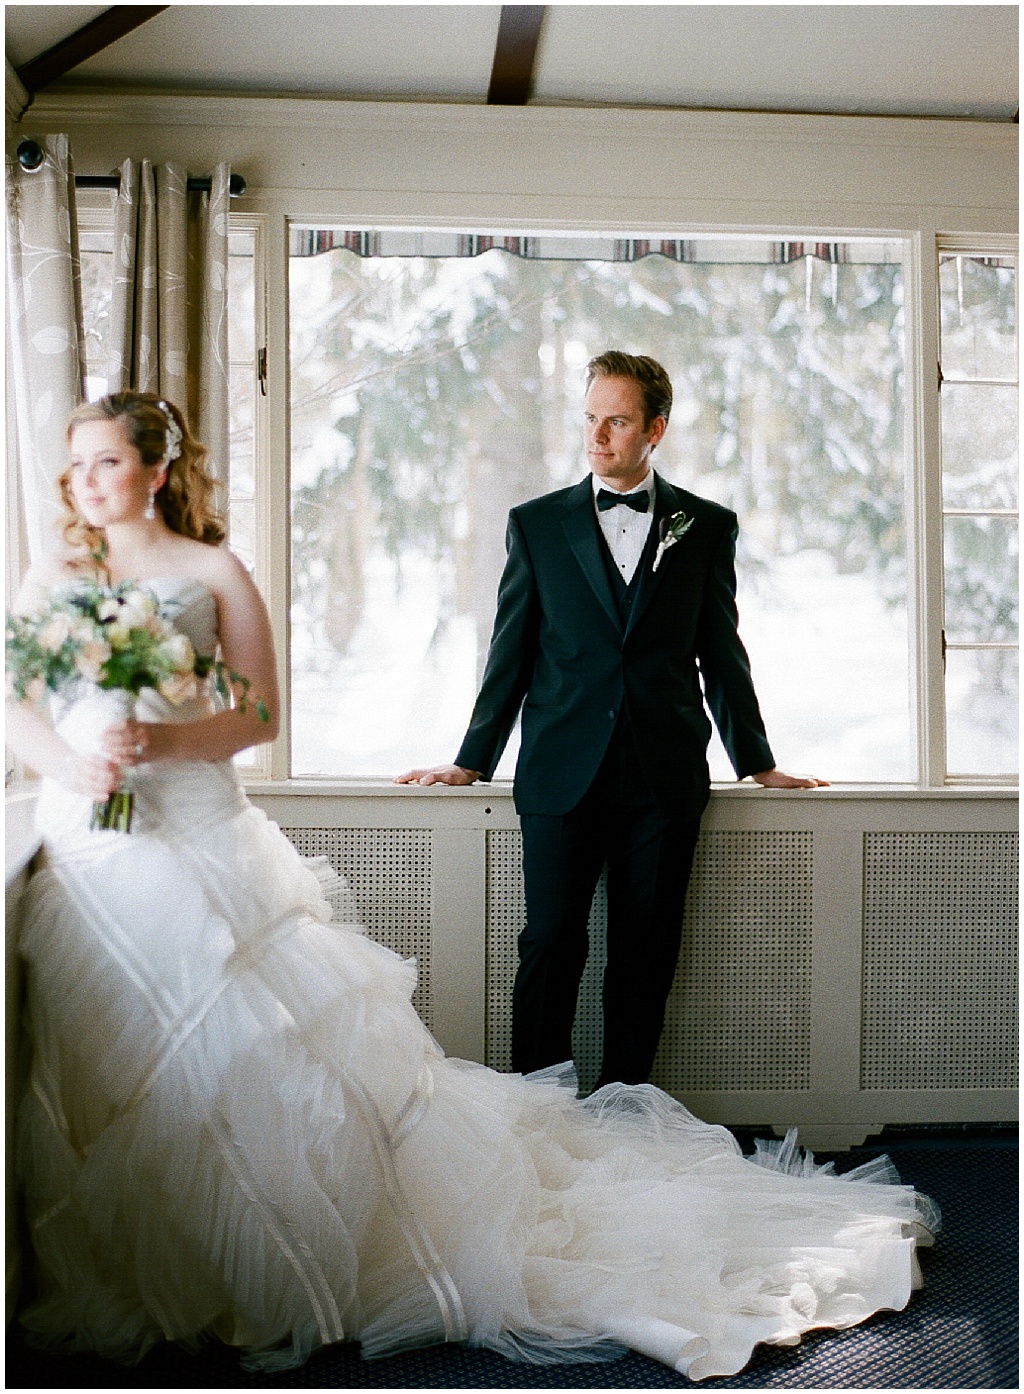 Wedding Styling and Design LoveWell Weddings, Taken by Sarah Photography, Fingerlakes Wedding Style Photoshoot